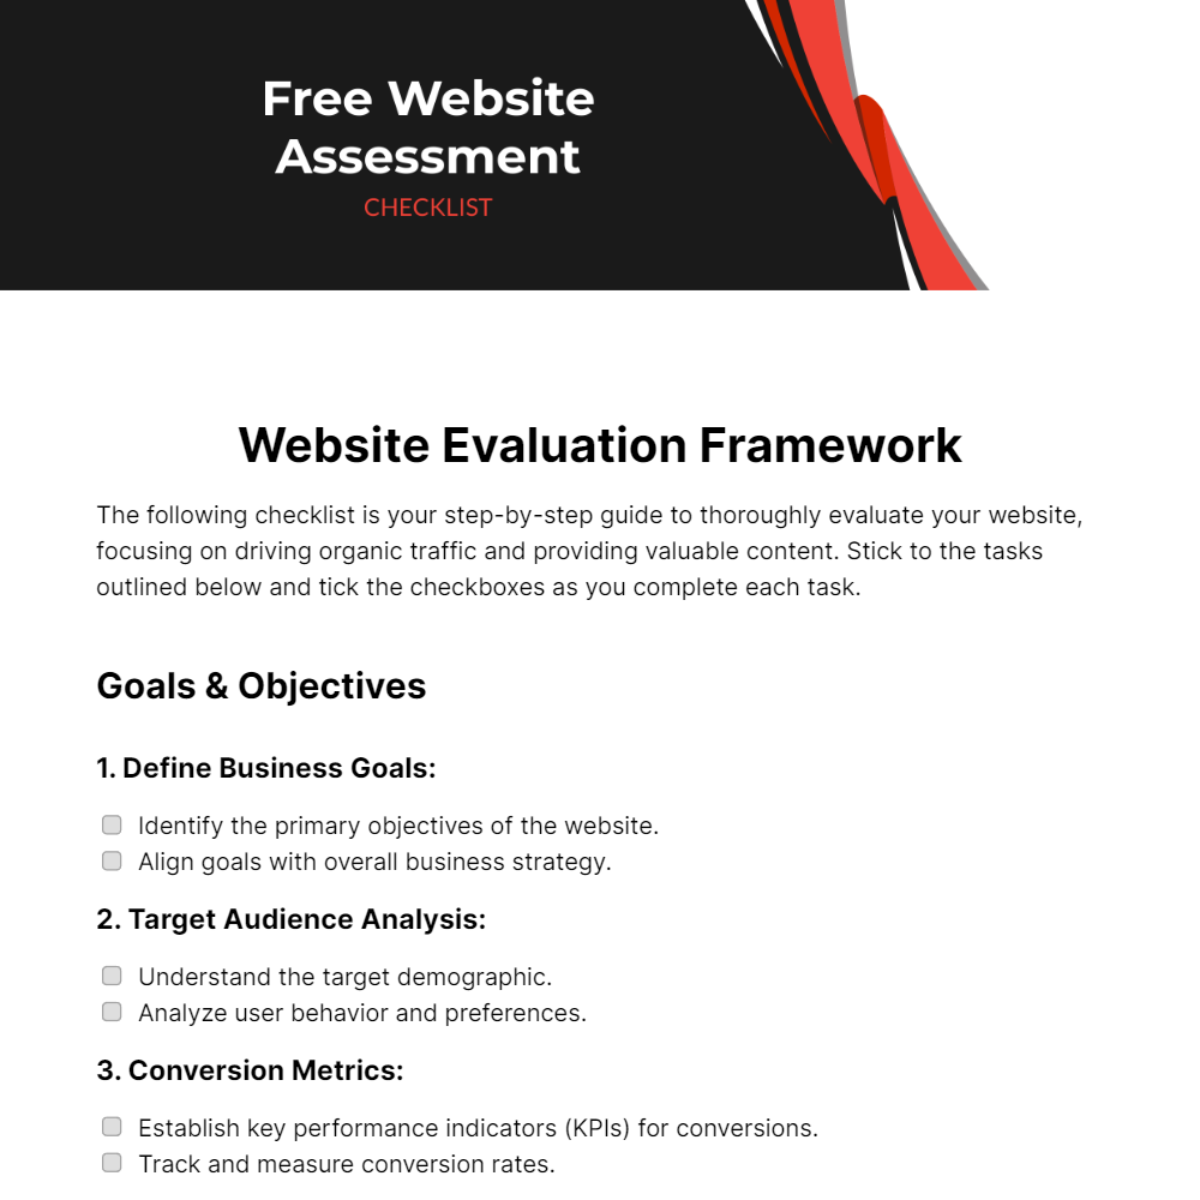 Free Website Assessment Checklist Template